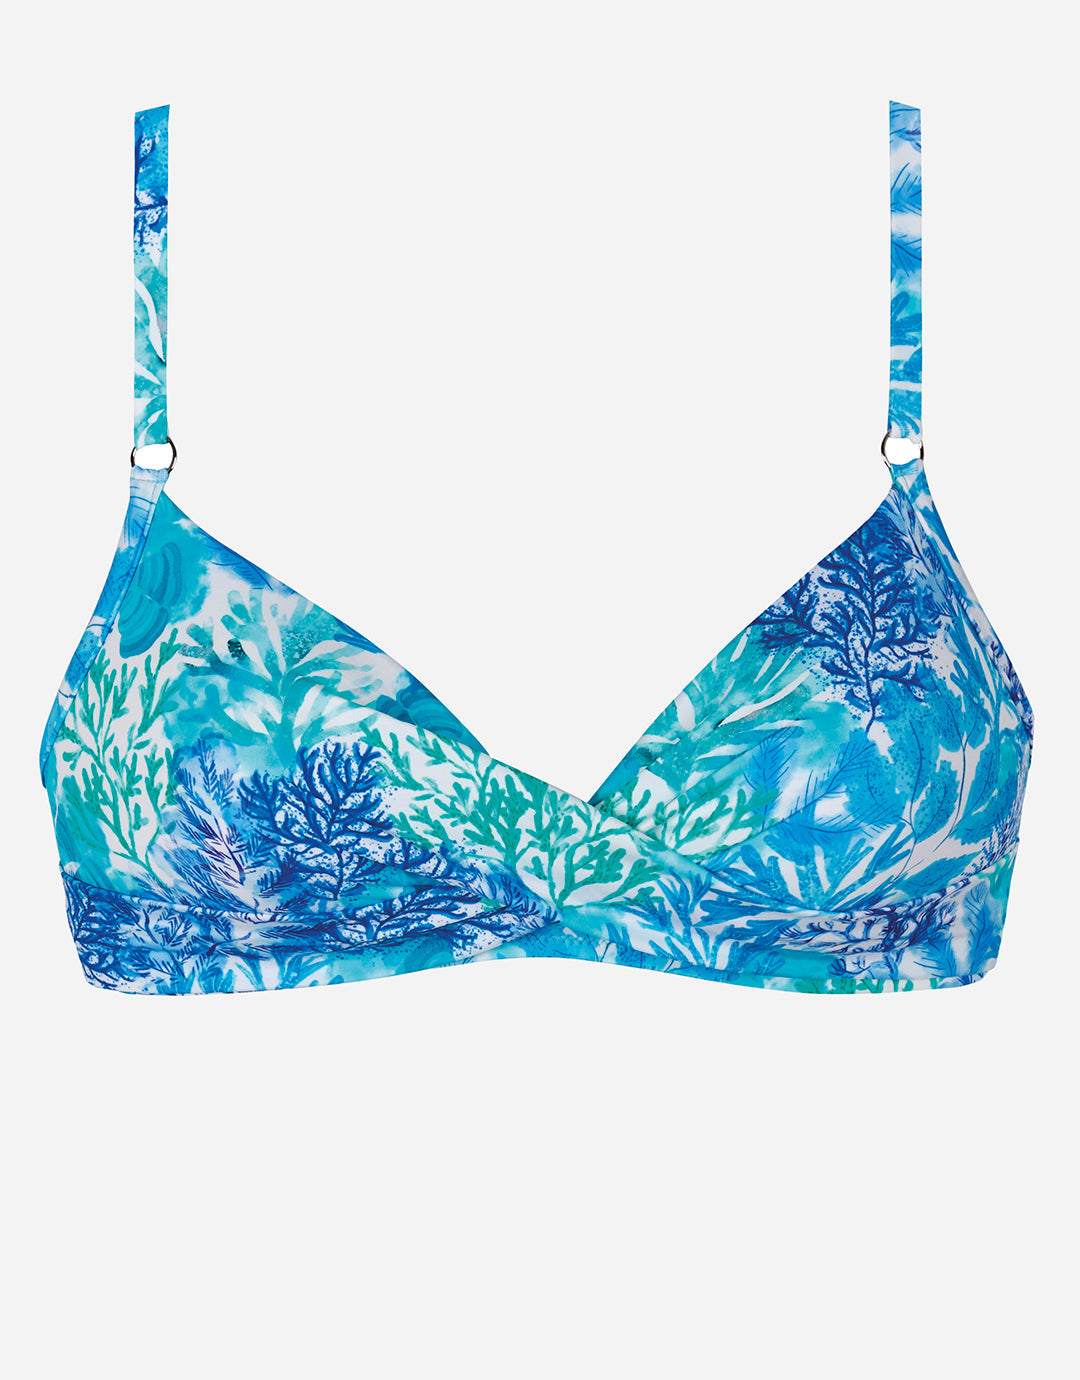 Coral Twist Front Bikini Top - Turquoise - Simply Beach UK